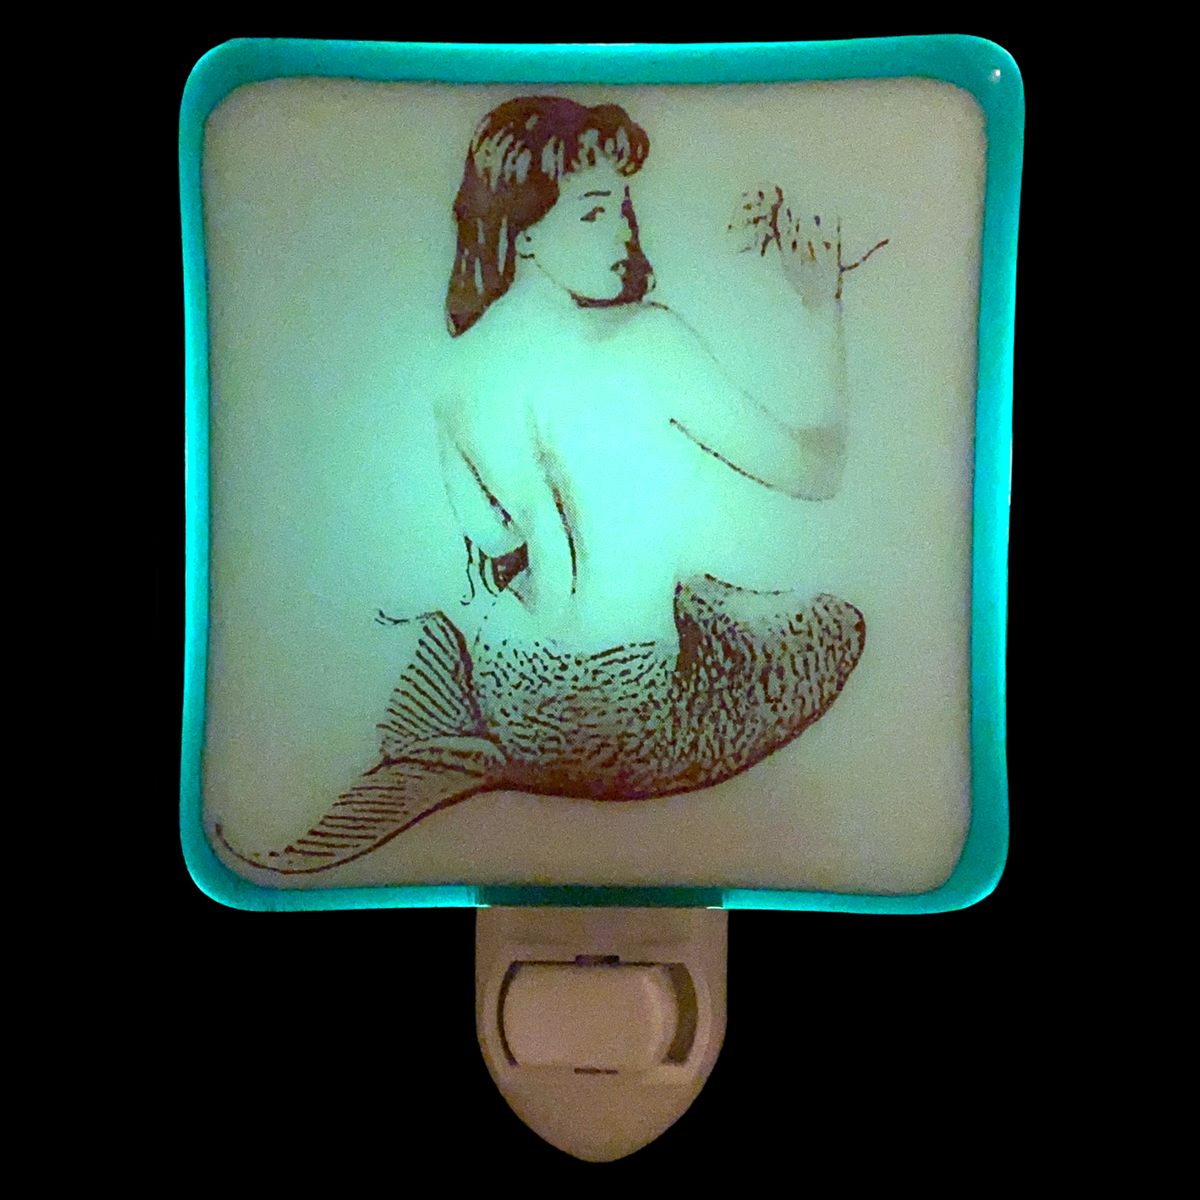 Mermaid Vintage Pin Up Girl Night Light